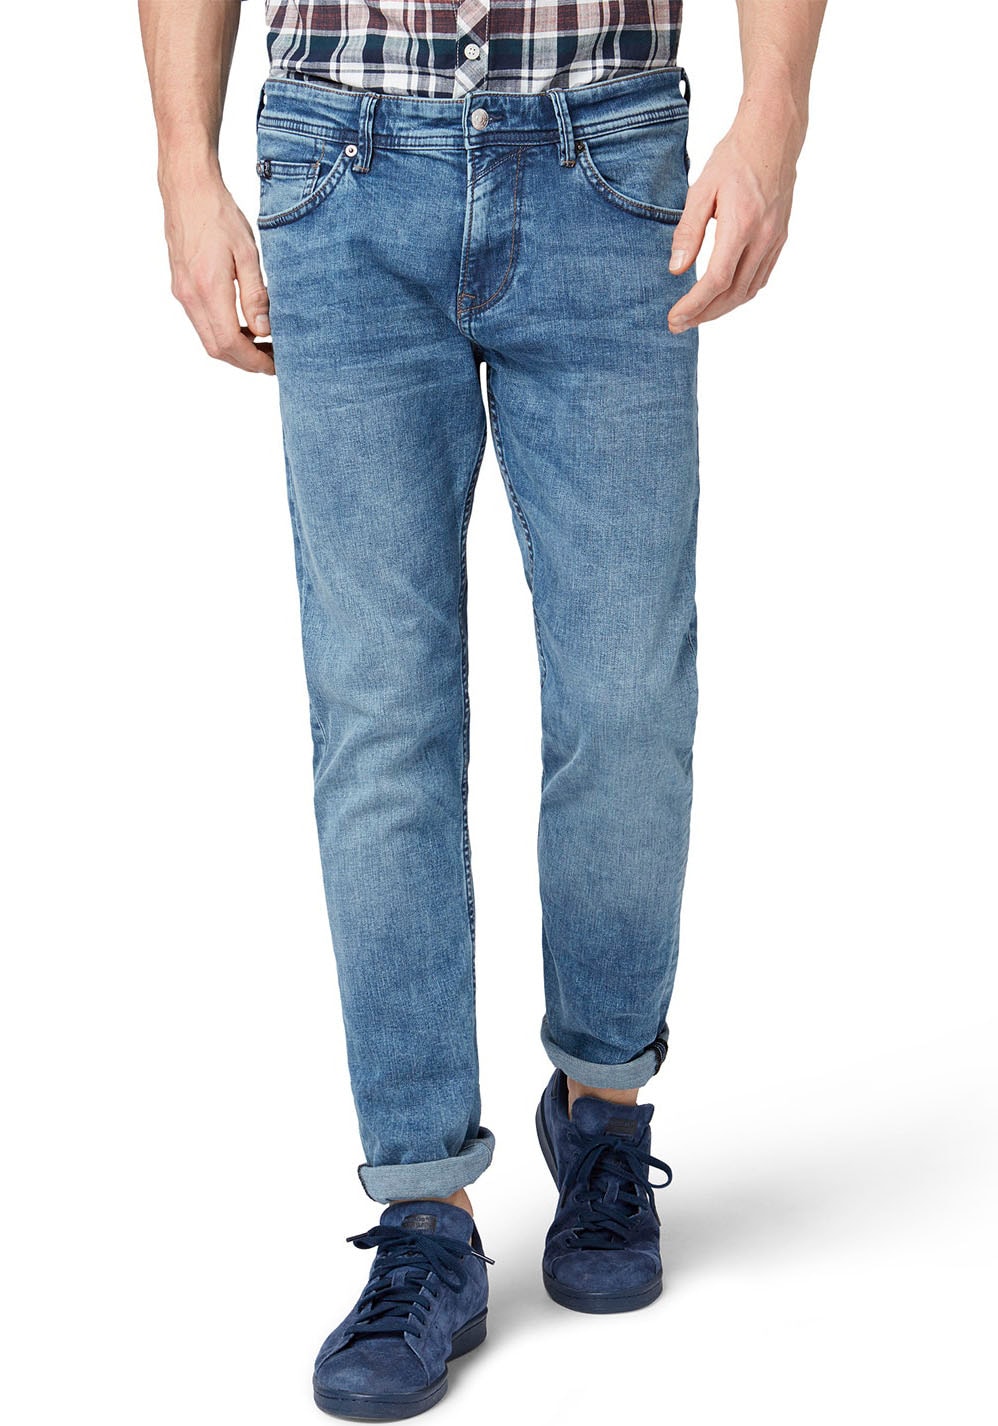 TOM TAILOR DENIM Herren Piers Jeans, Blau (Light Stone Wash Den 10280), 29W / 32L